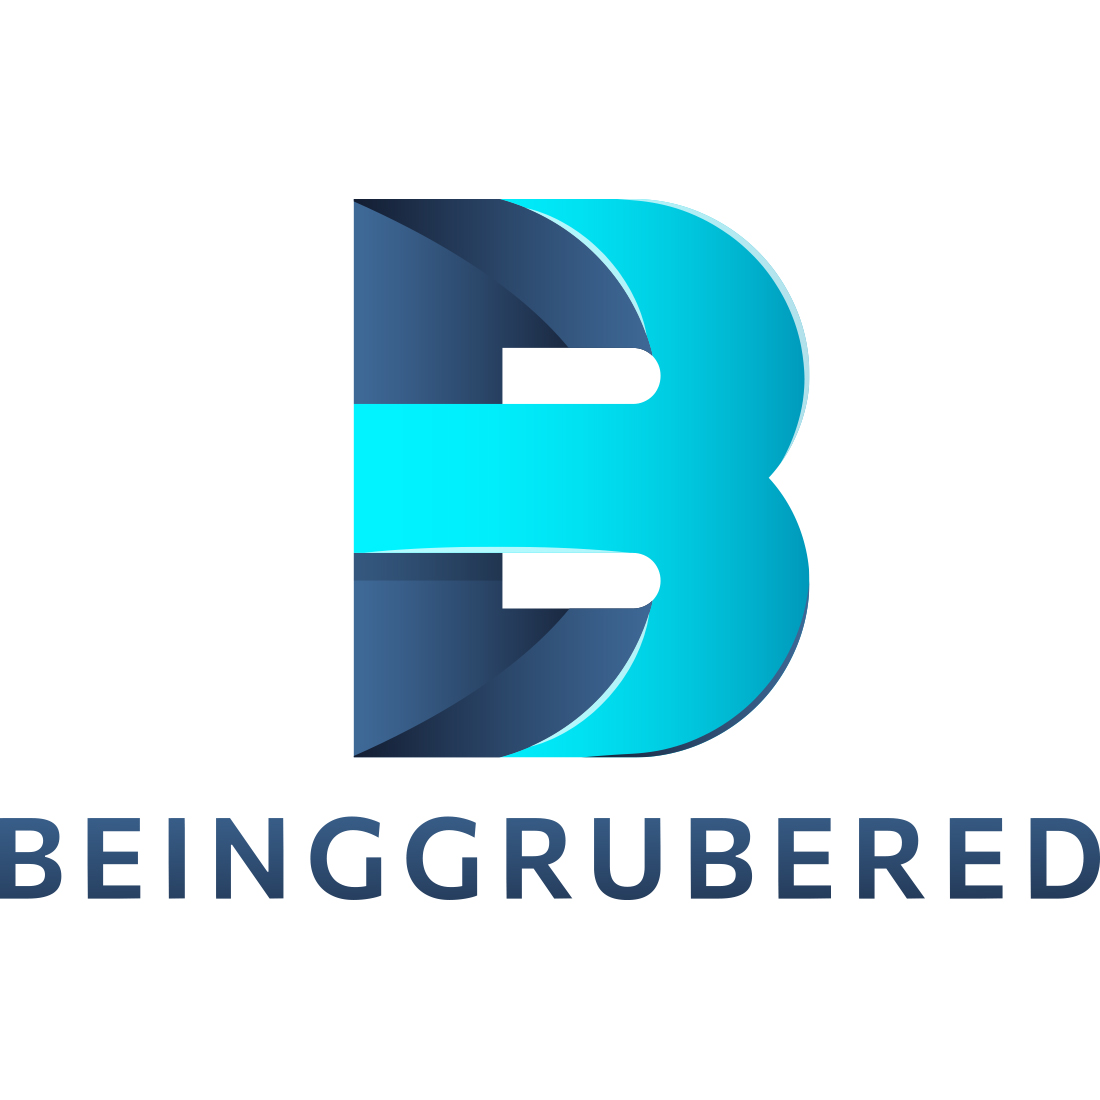 beinggrubered logo presentation 1